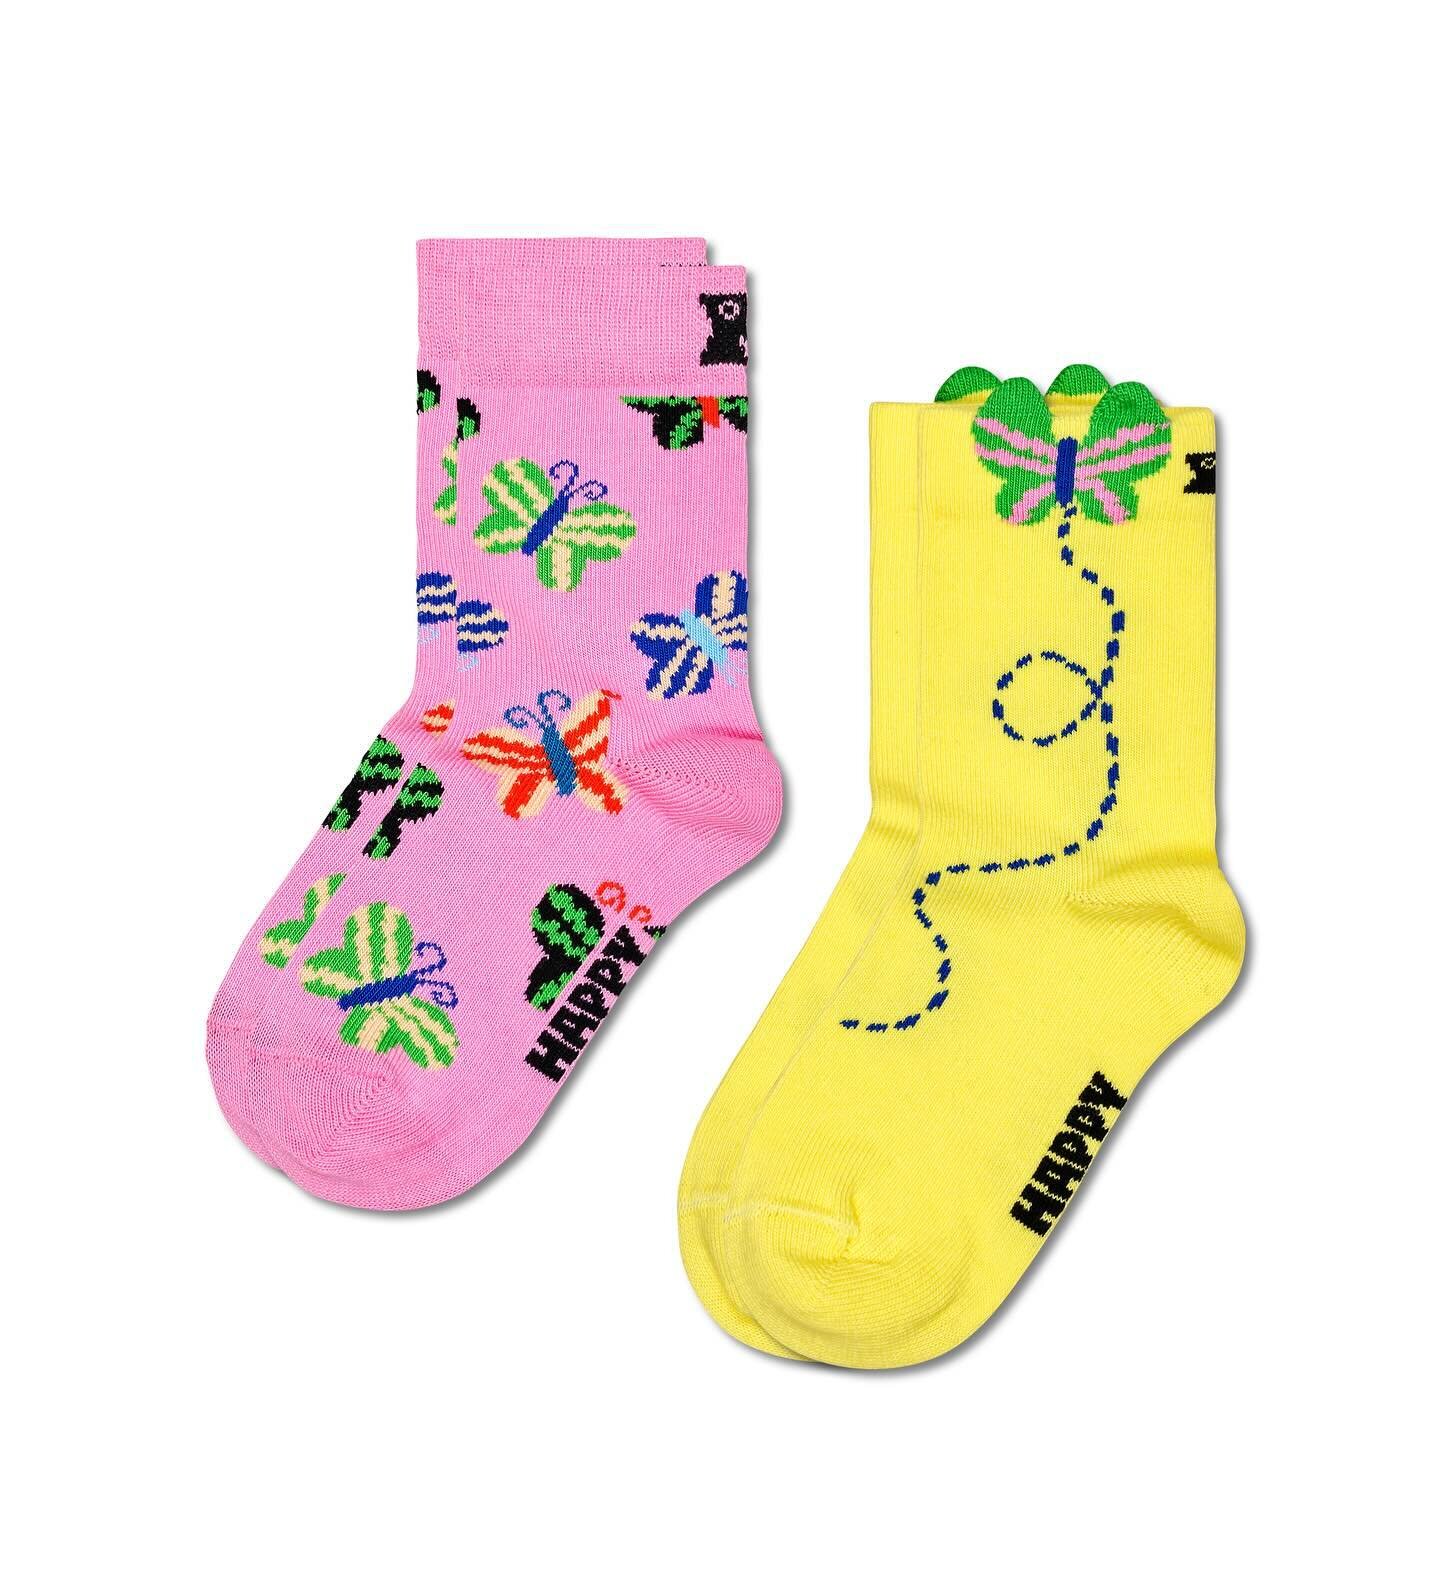 New Spring butterfly socks from @happysocks 🦋